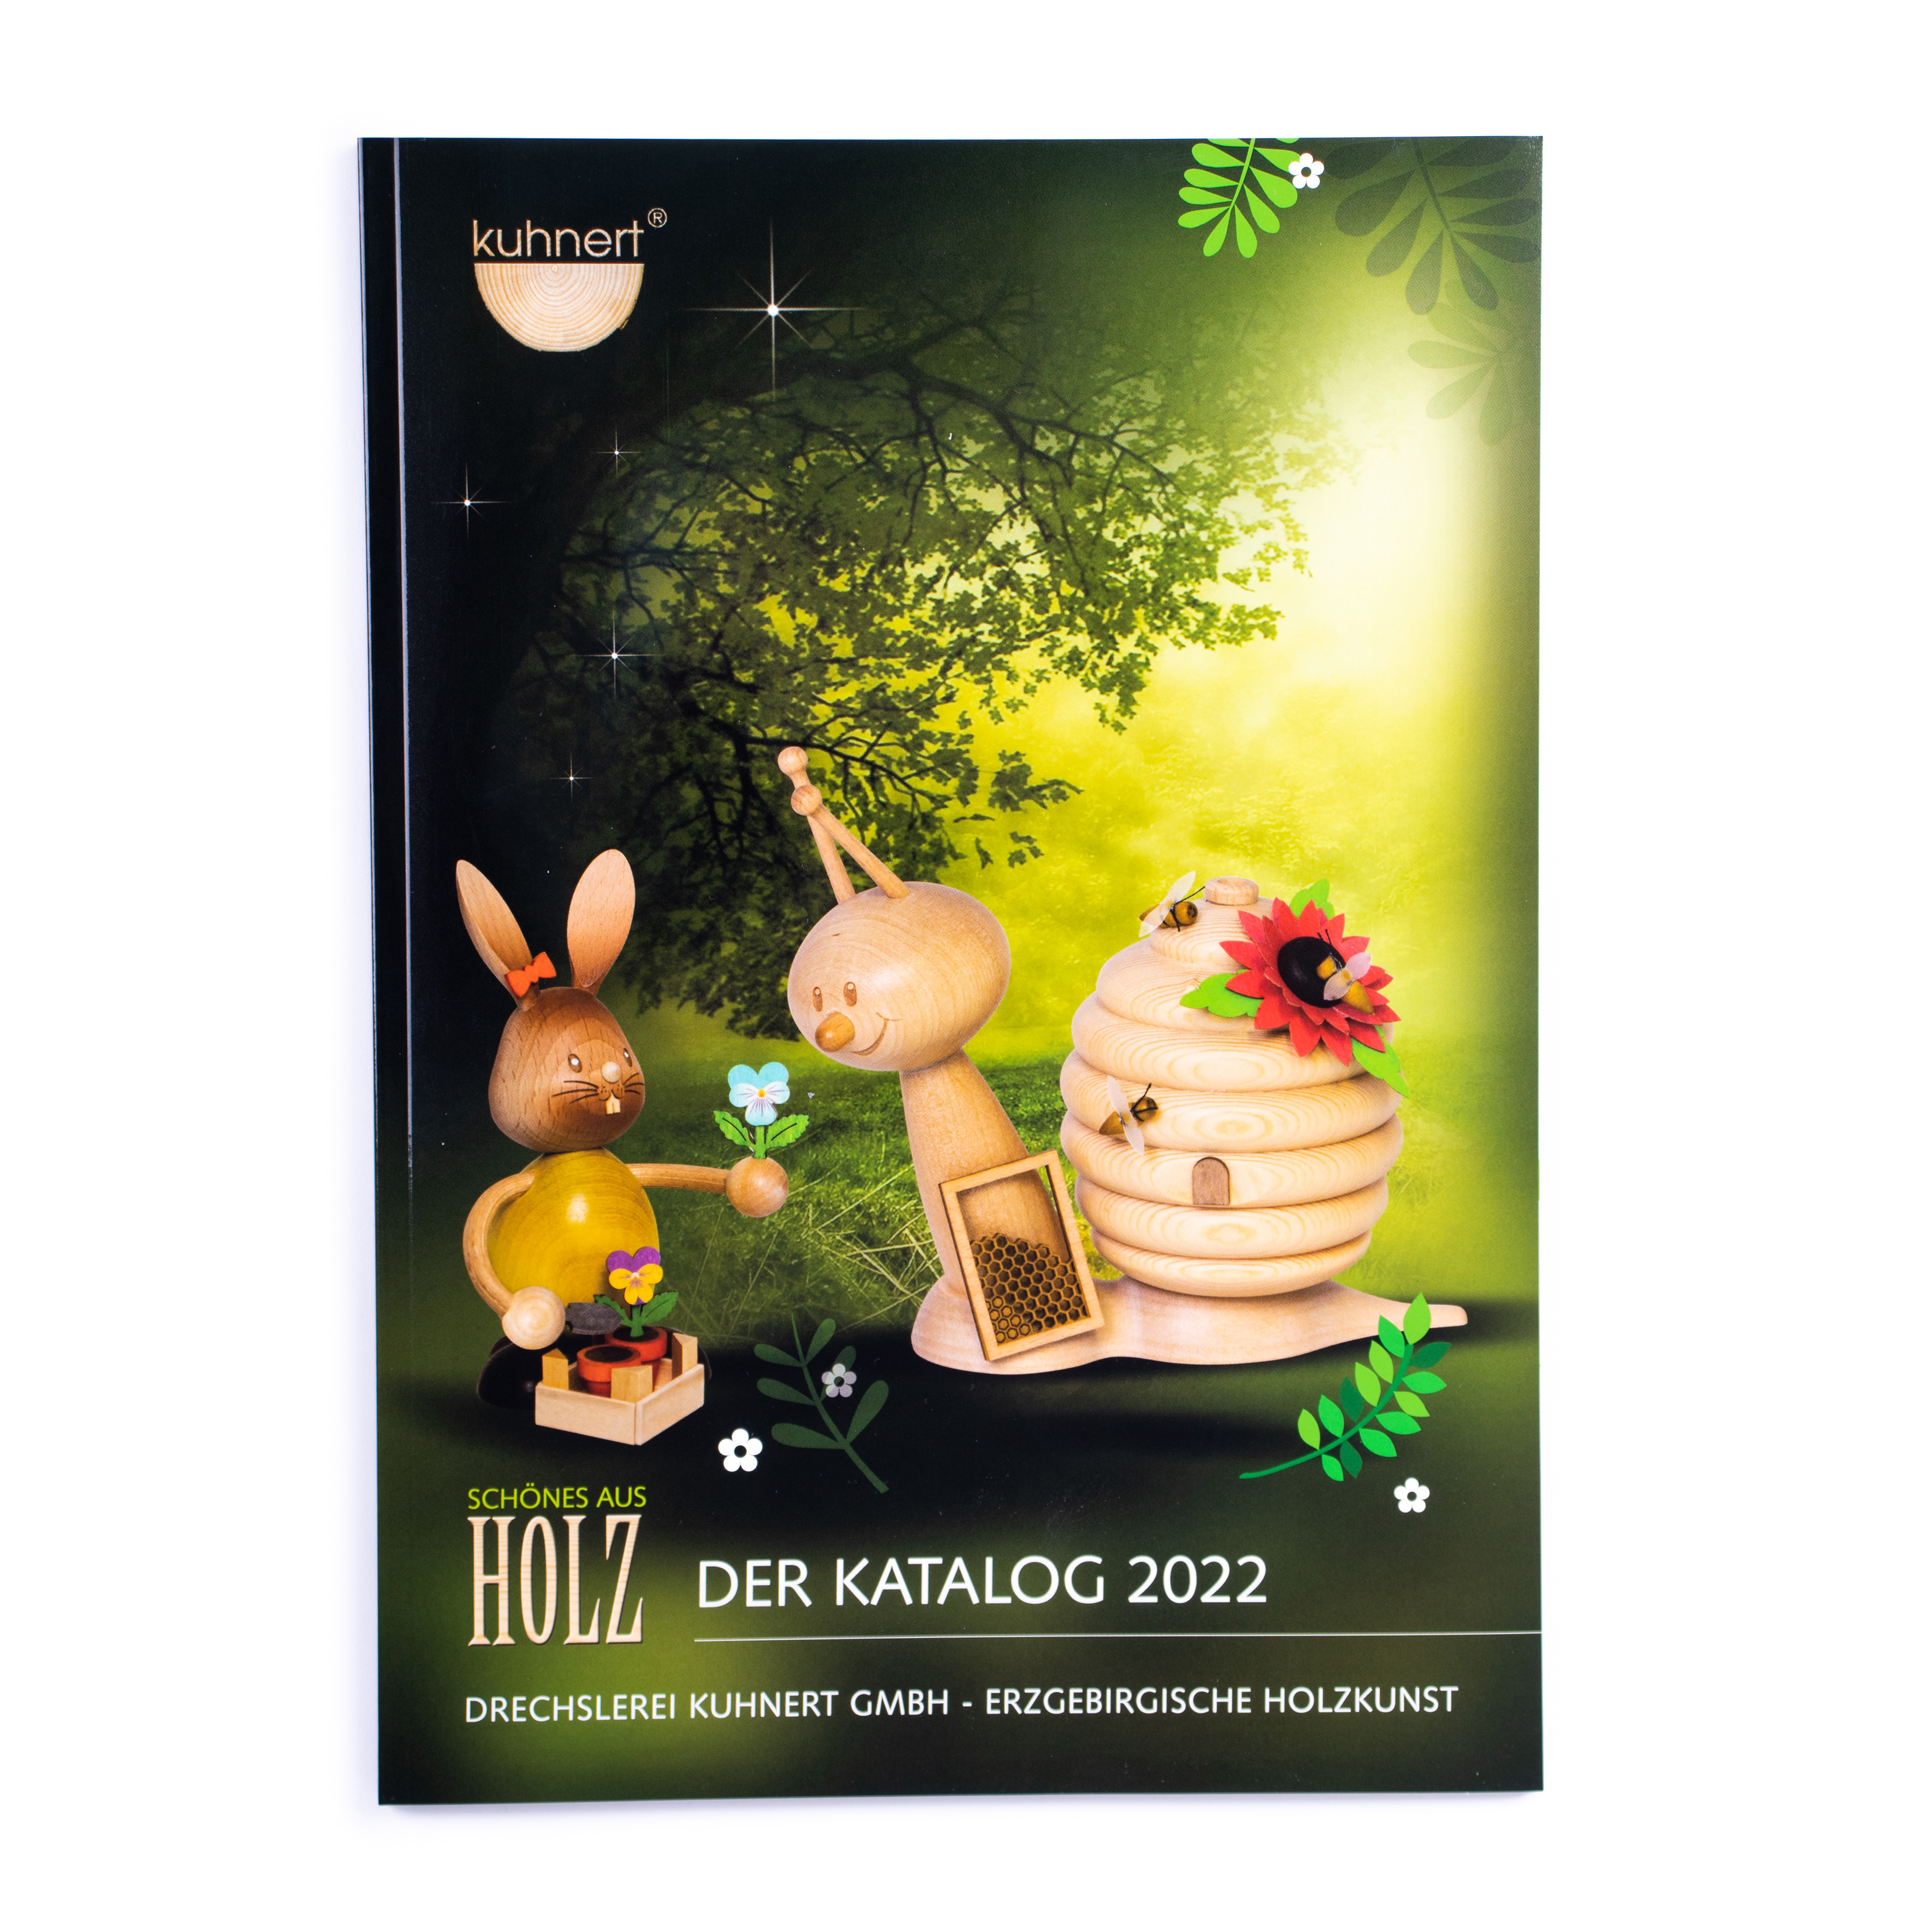 Der Katalog 2022